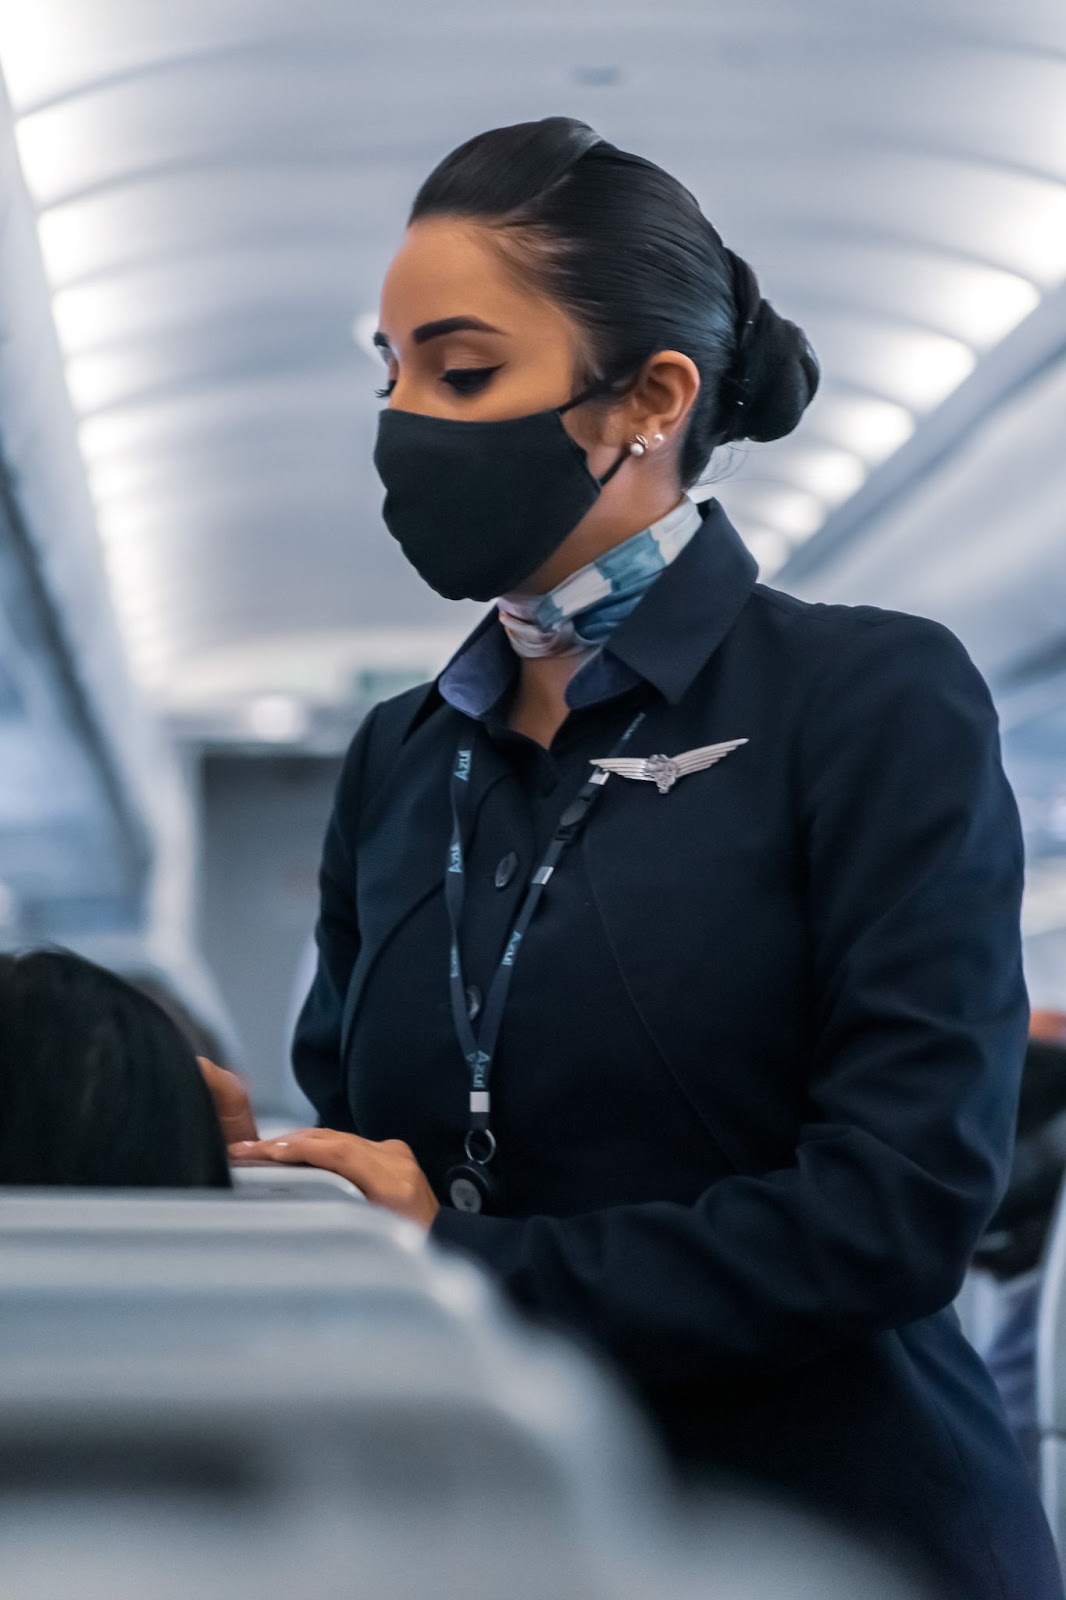 Understanding the Flight Attendant Lifestyle